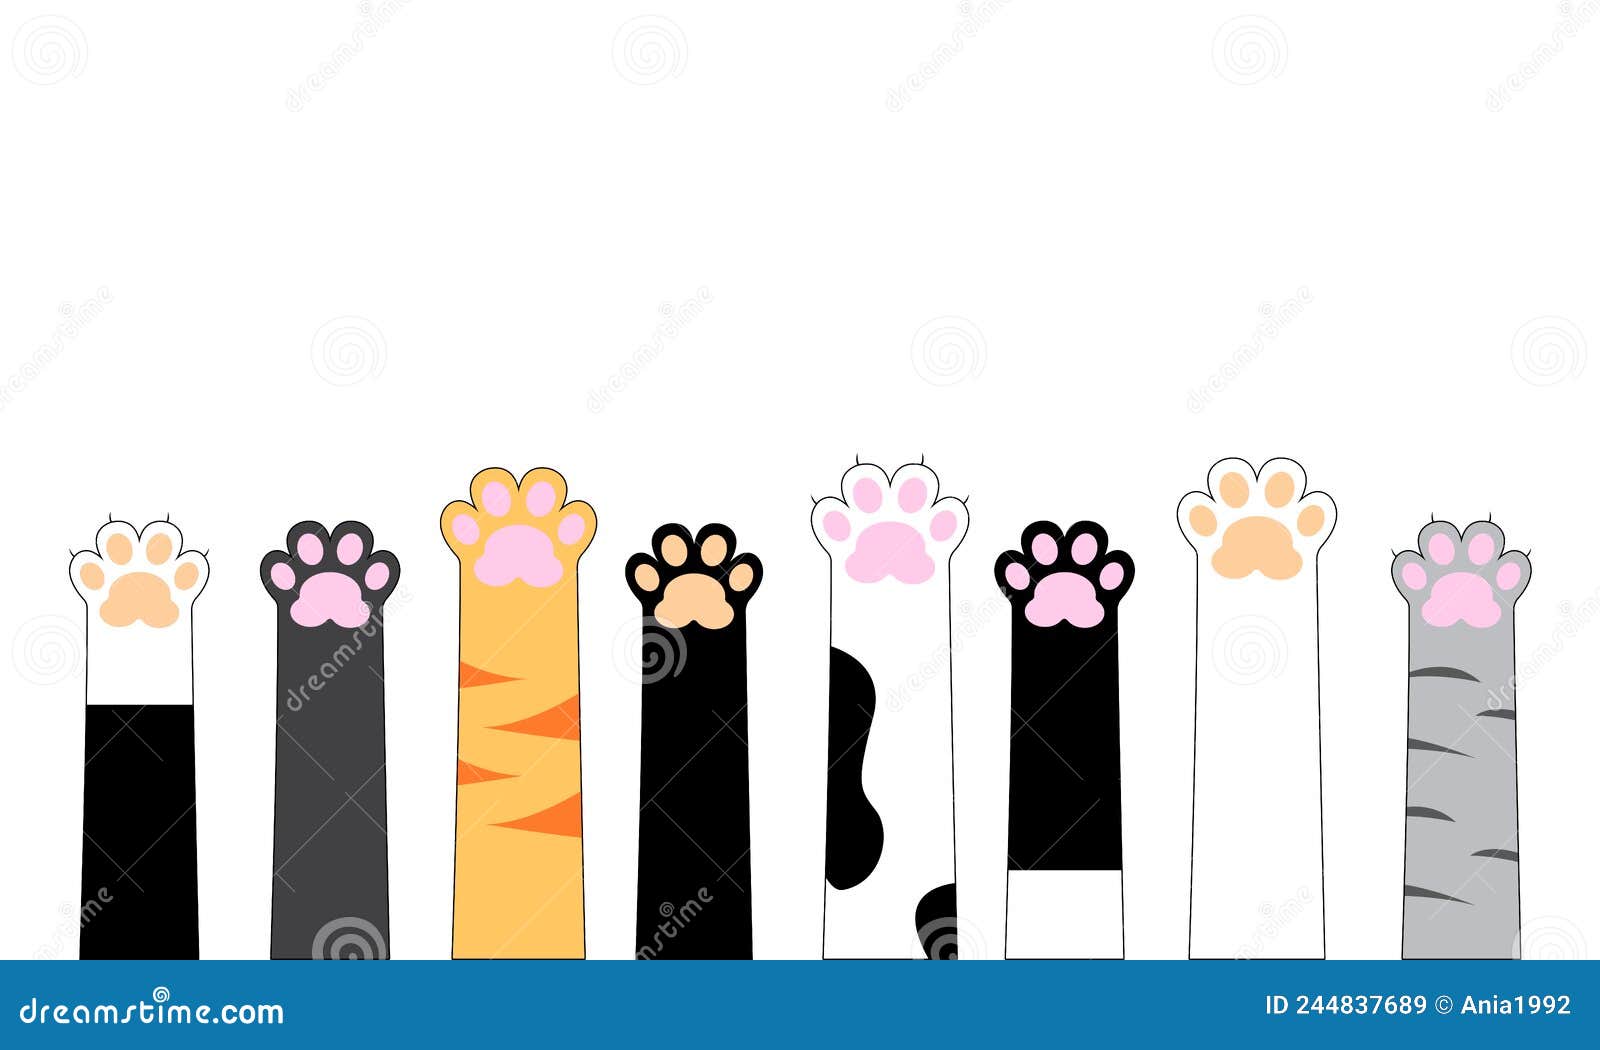 Vetores e ilustrações de Gato multicolorido para download gratuito